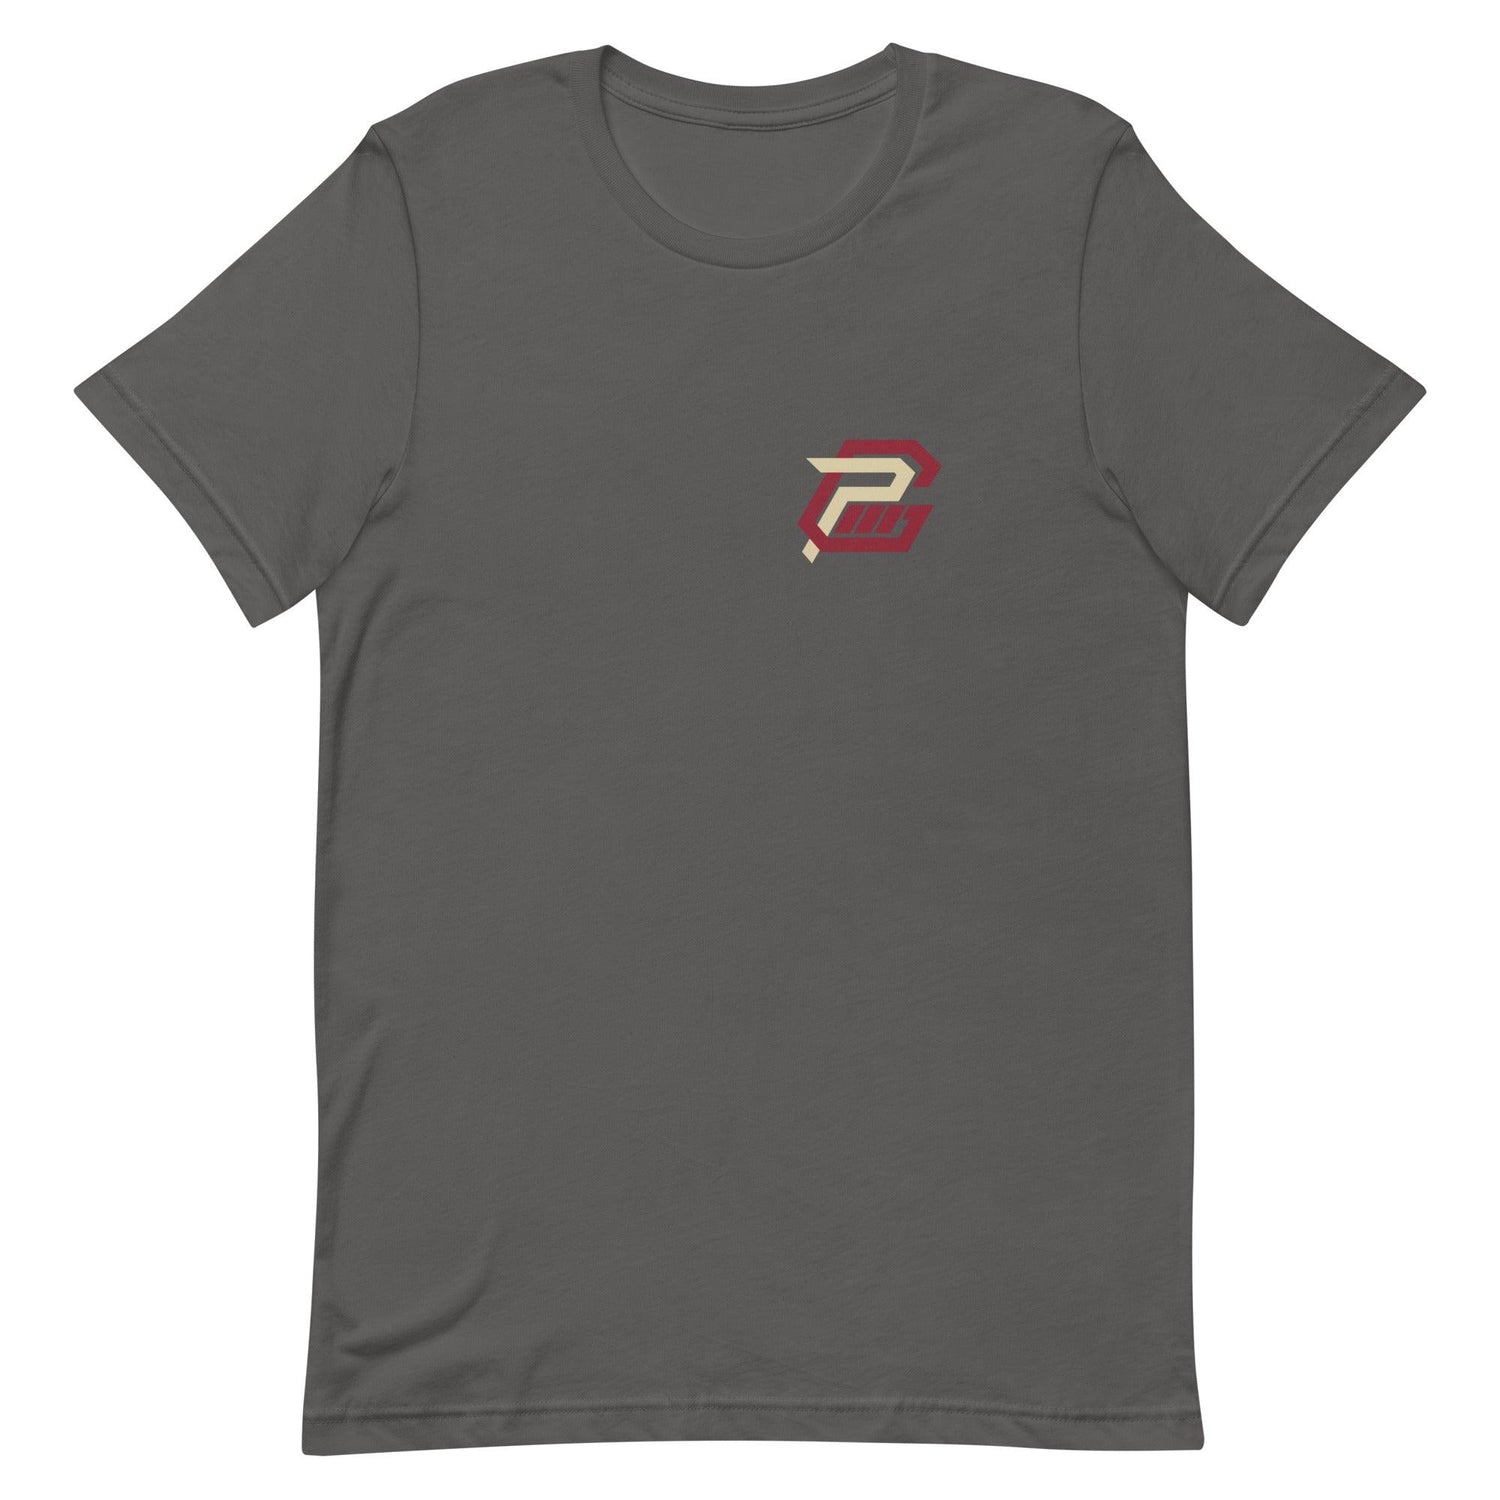 Patrick Garwo III “PG” t-shirt - Fan Arch